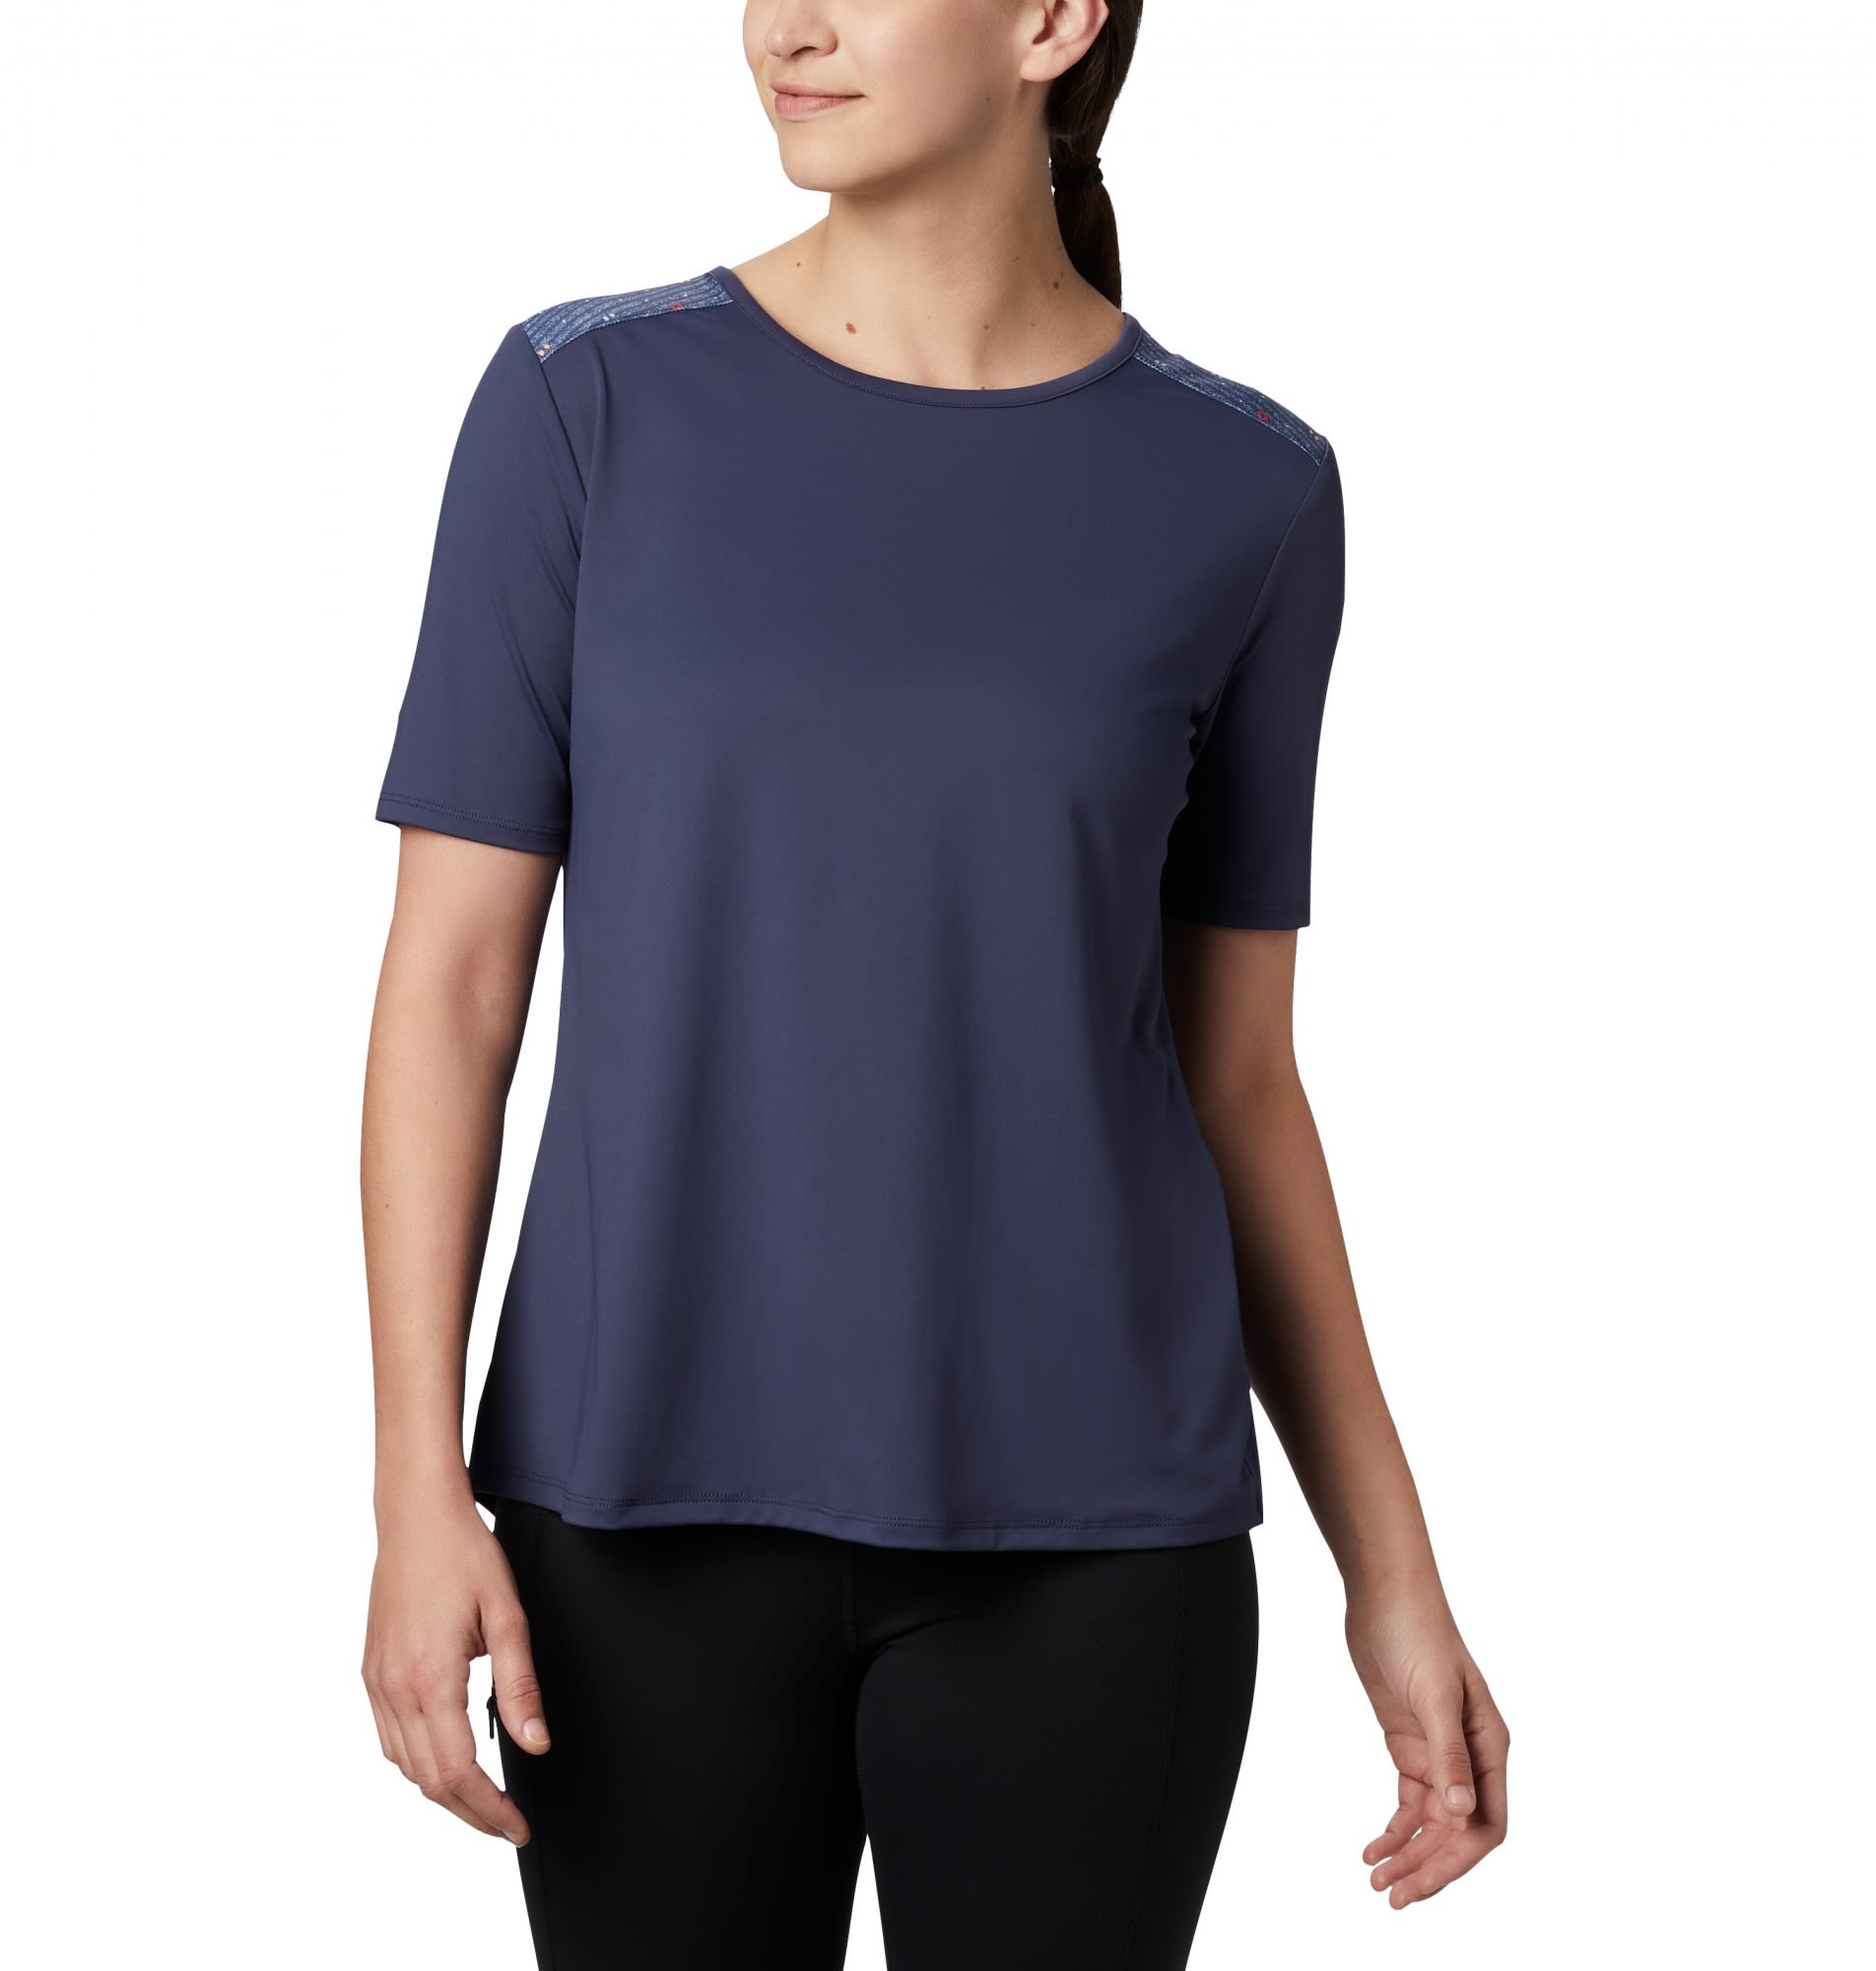 Columbia Chill River Short Sleeve Shirt Blau- Female Kurzarm-Shirts- Grsse S - Farbe Nocturnal - Print unter Columbia